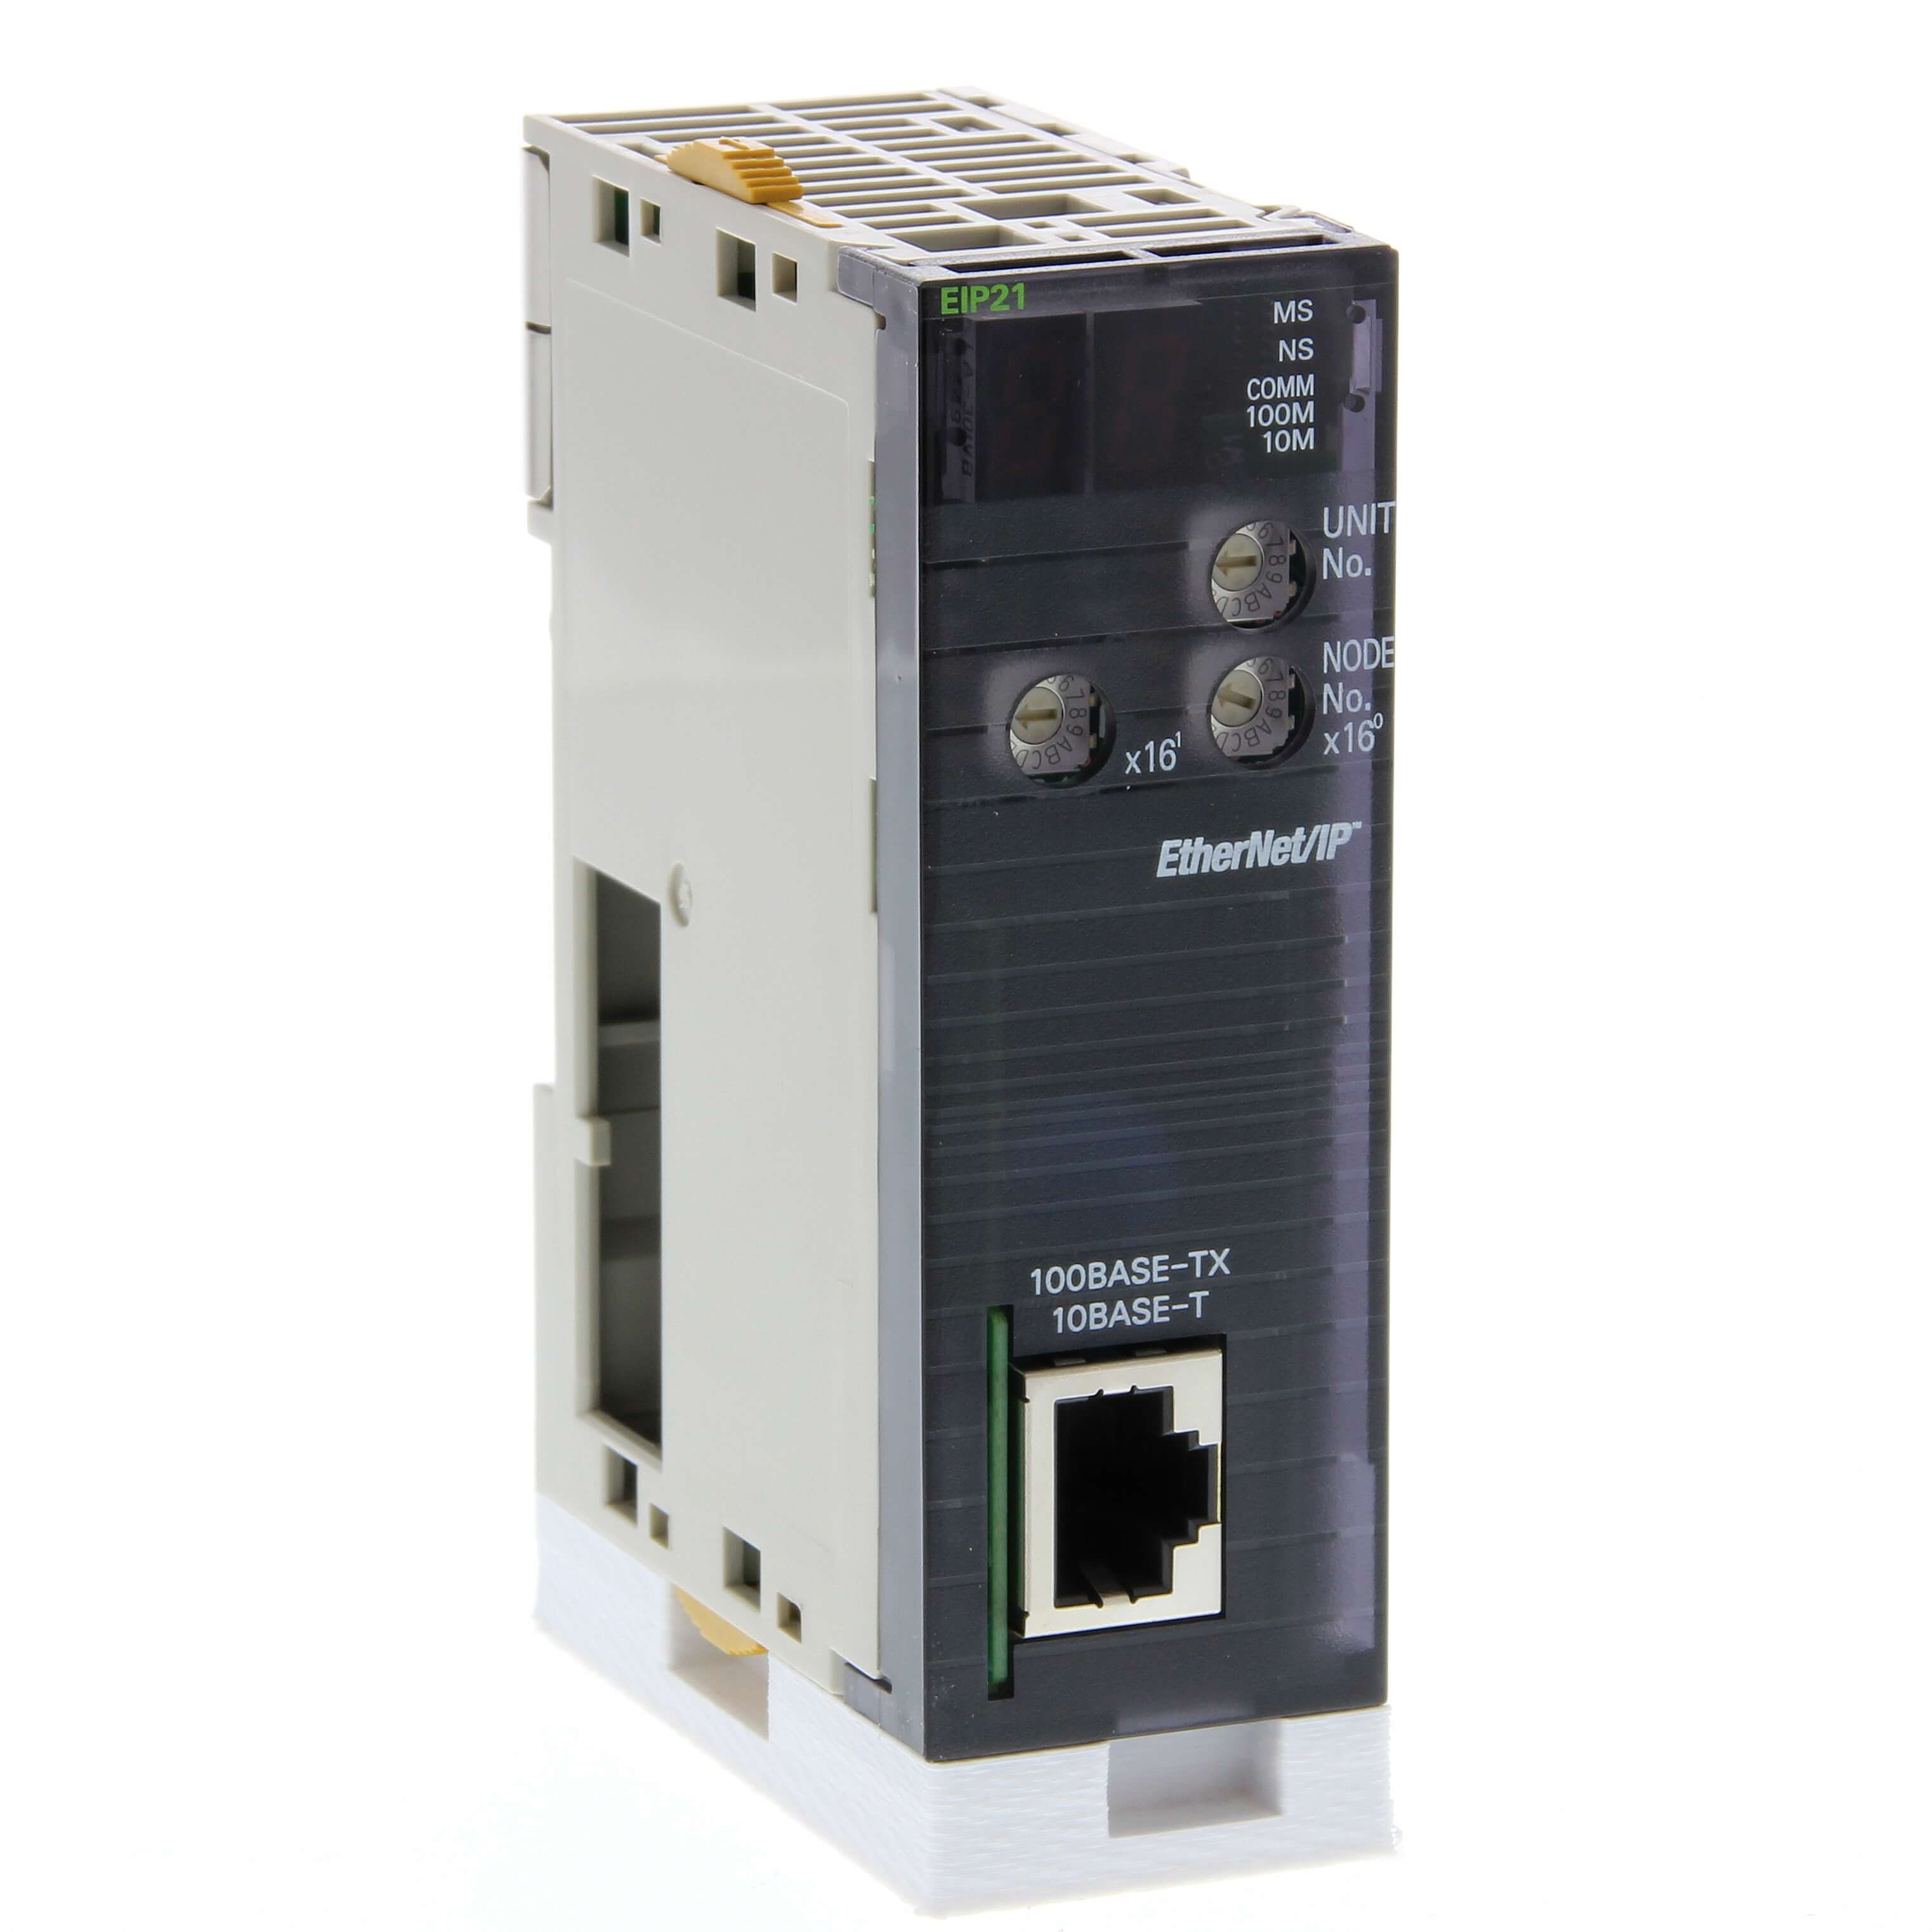 Ethernet/IP OMRON オムロン CJ1W-EIP21-